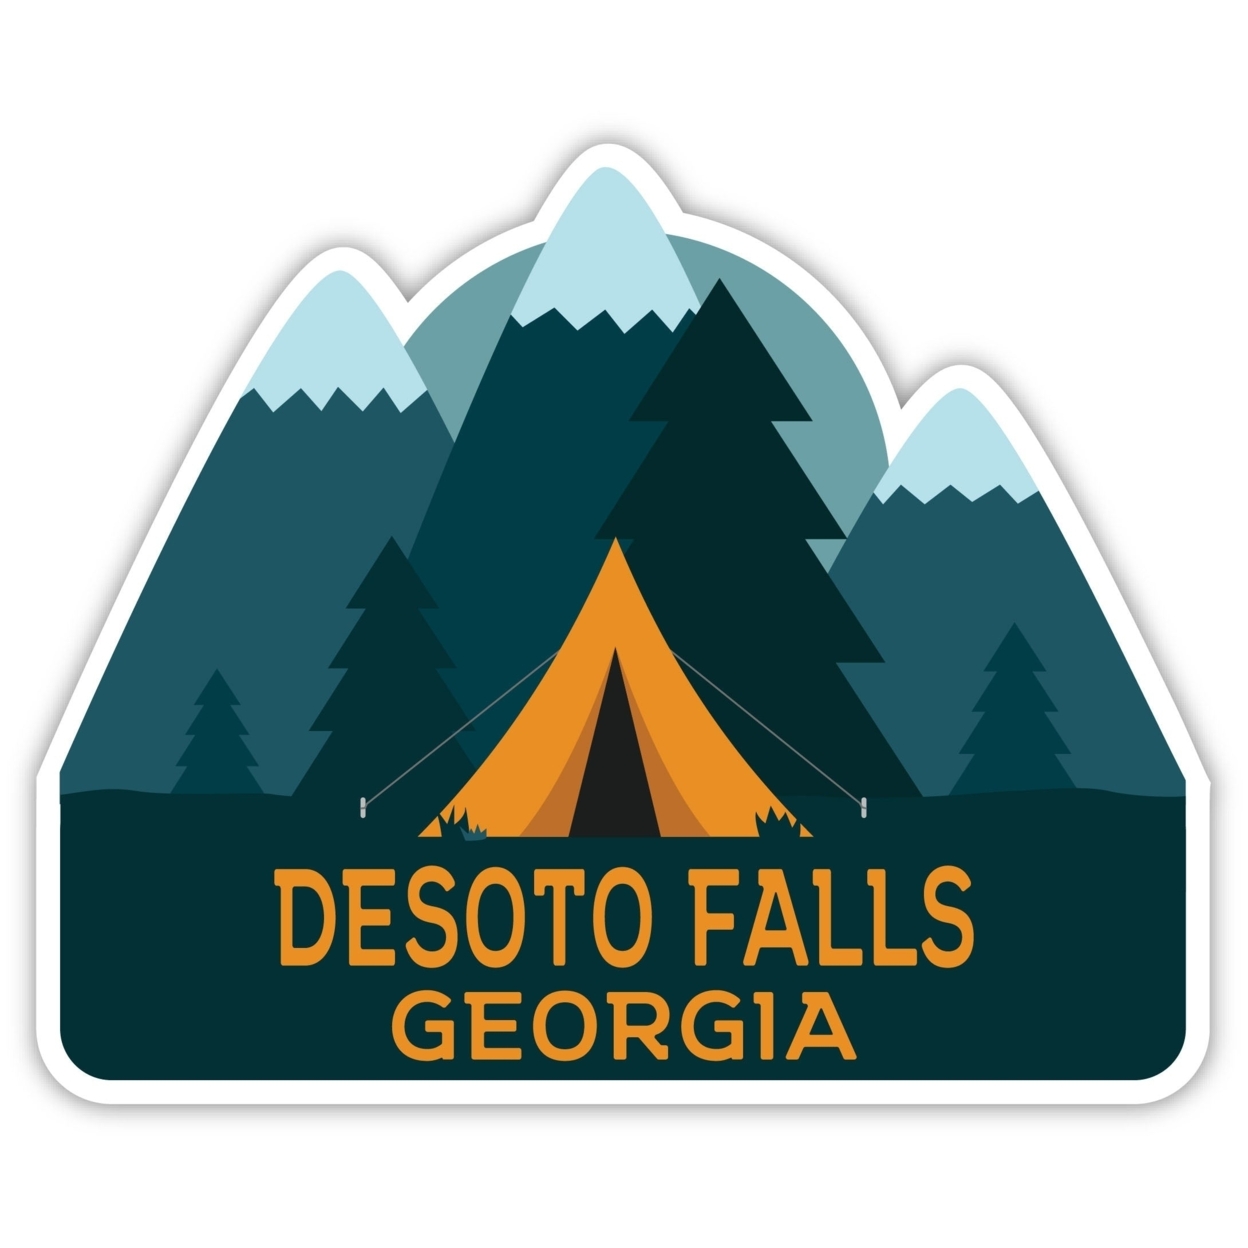 DeSoto Falls Georgia Souvenir Decorative Stickers (Choose Theme And Size) - 4-Pack, 8-Inch, Tent